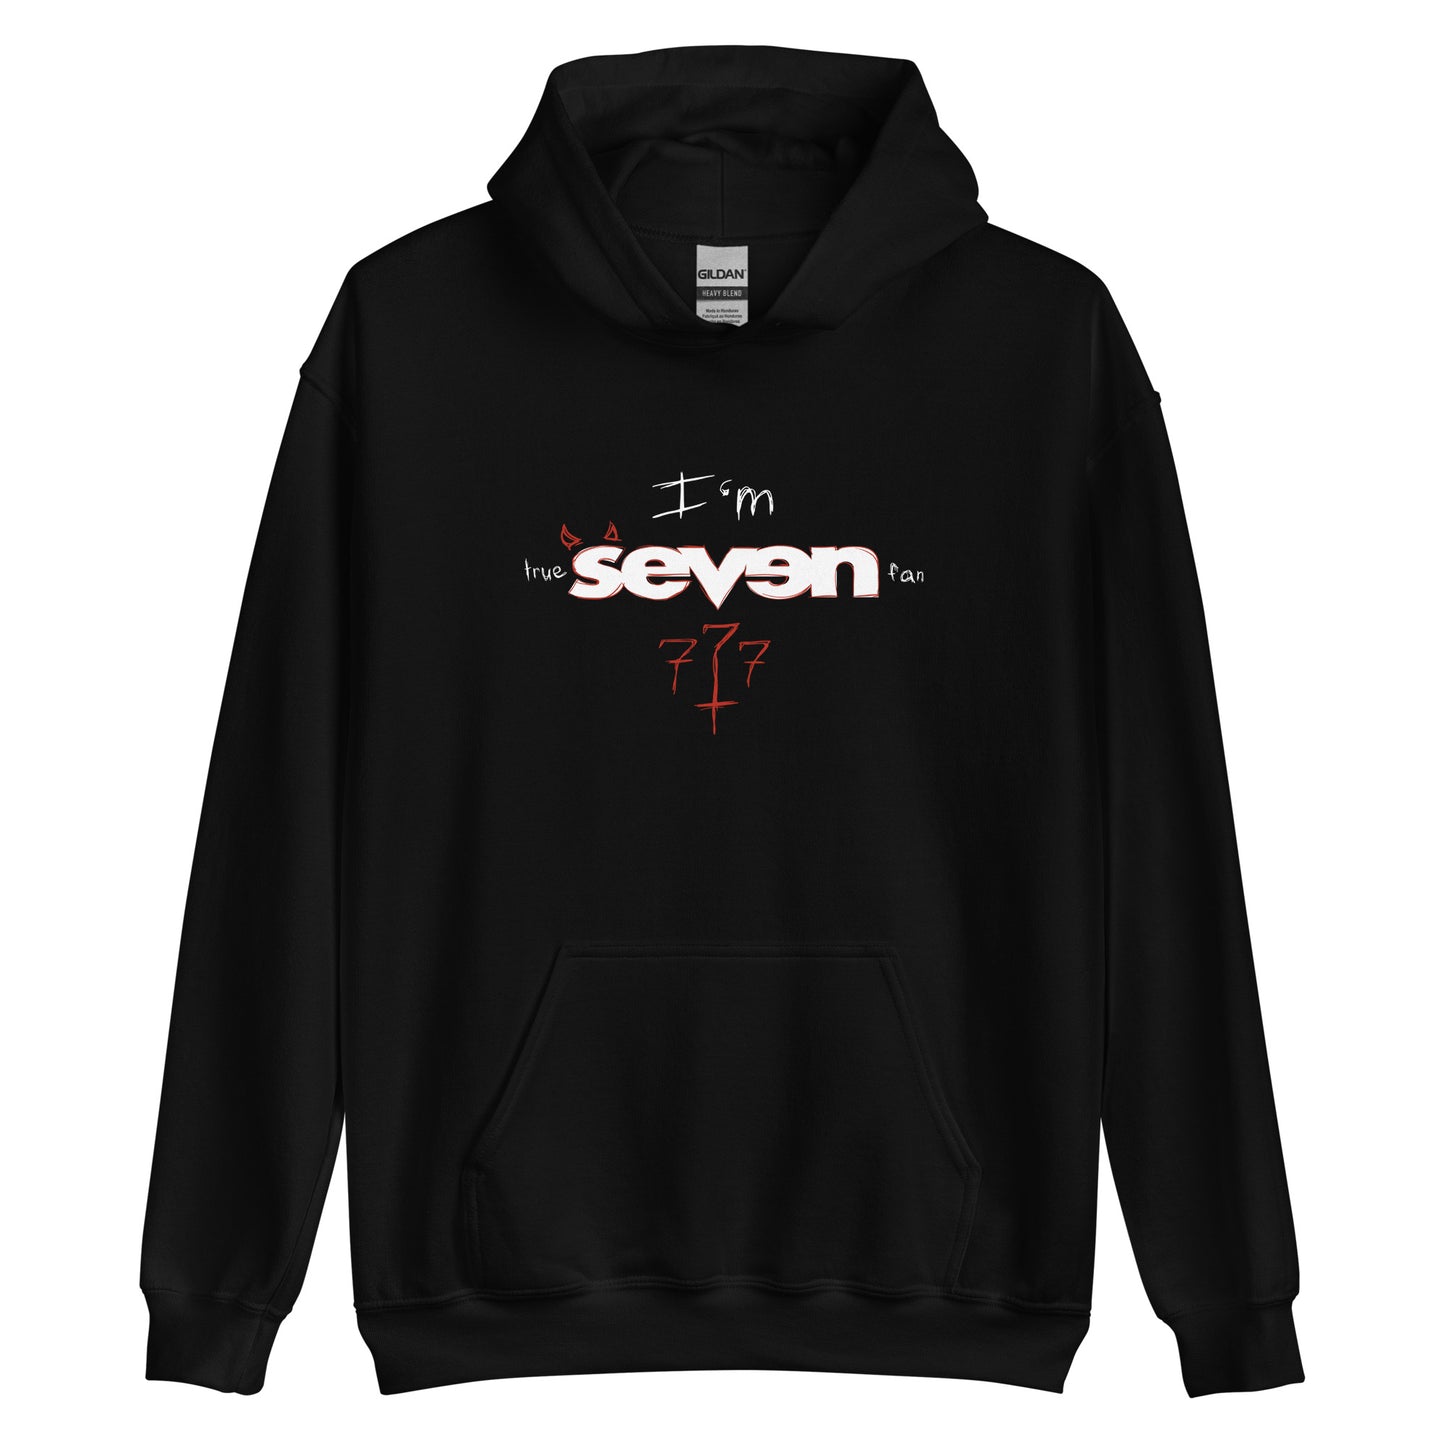 Seven Band Logo I'm Seven Unisex Hoodie